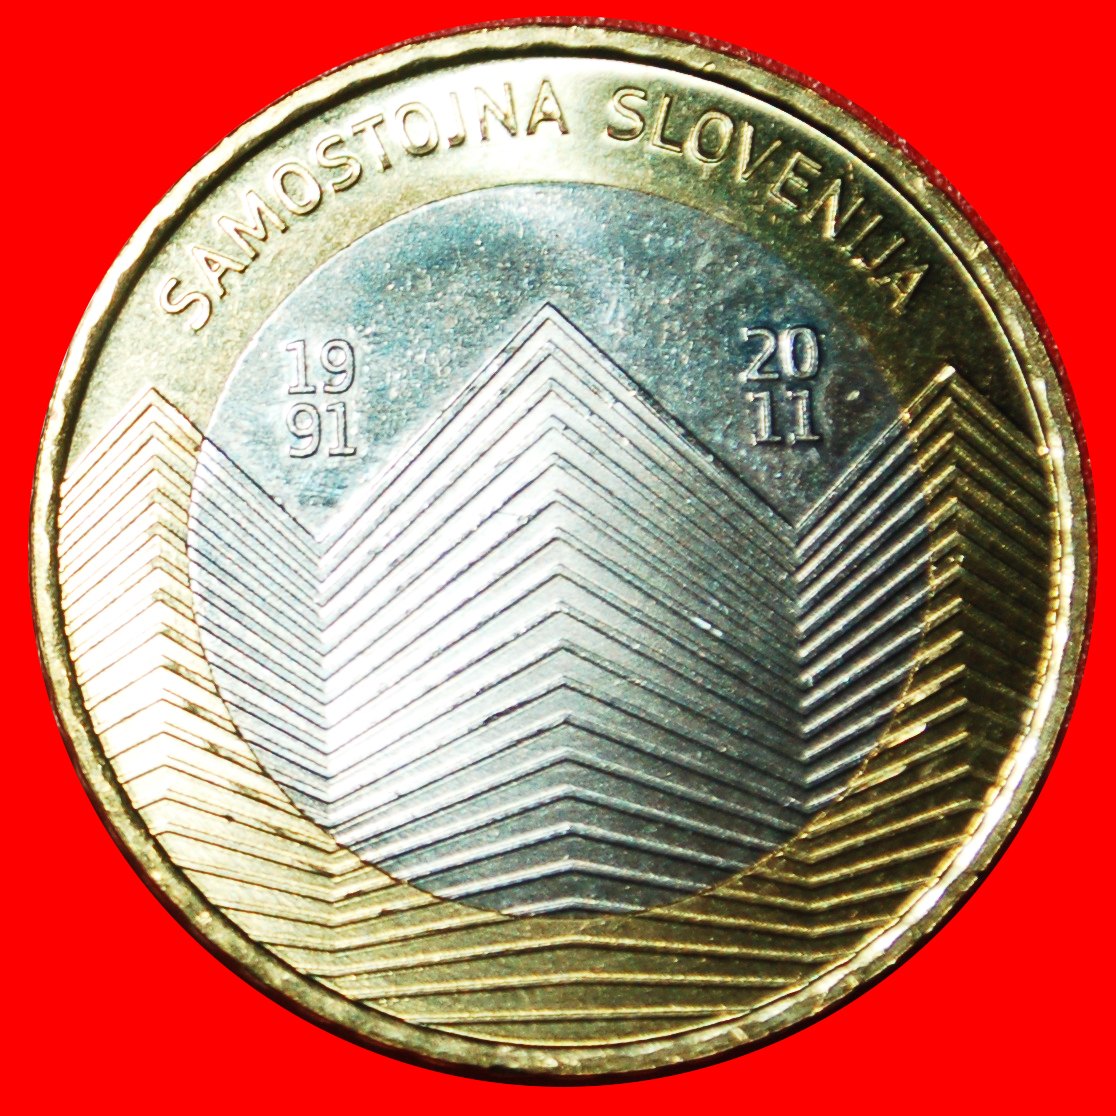  * SEPARATION FROM YUGOSLAVIA 1991: SLOVENIA ★ 3 EURO 2011 UNC UNCOMMON! ★LOW START ★ NO RESERVE!   